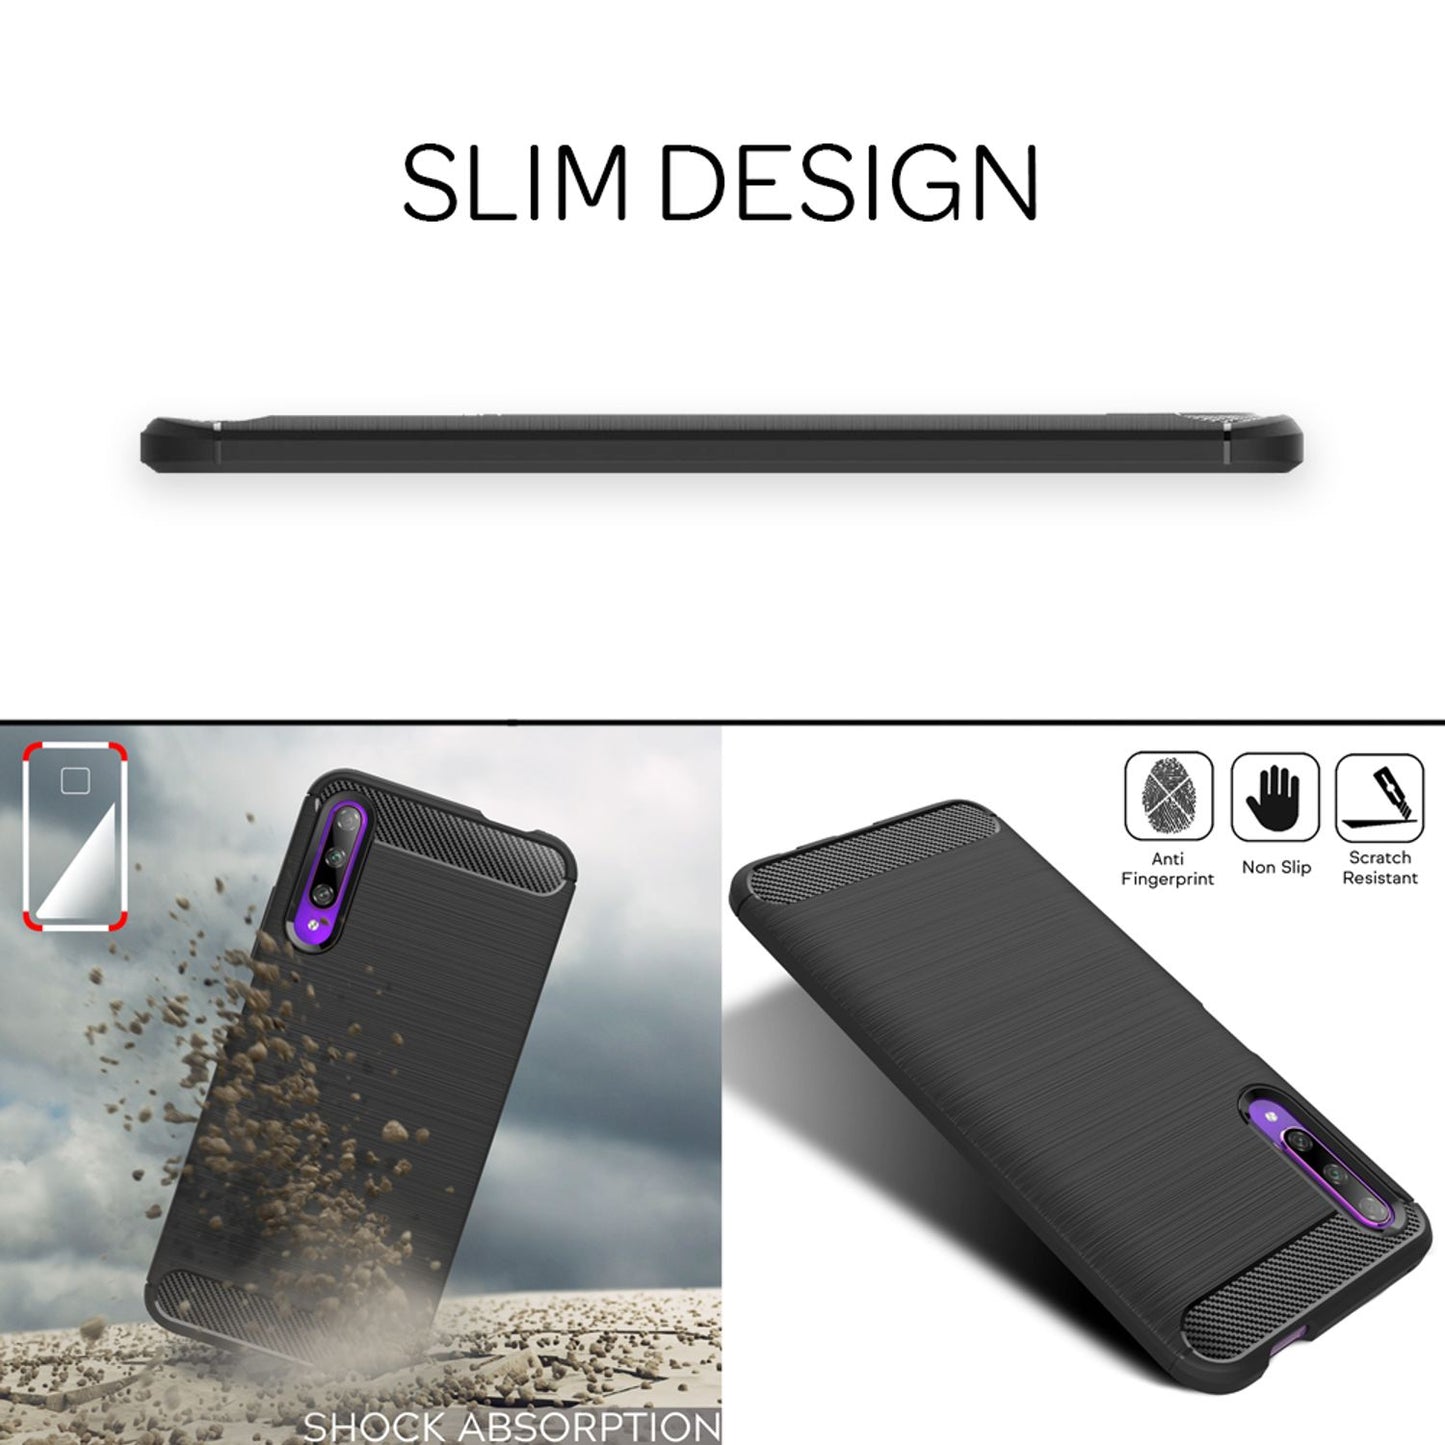 NALIA Handy Hülle für Honor 9X Pro, Carbon Case Silikon Cover Schutz Etui Bumper